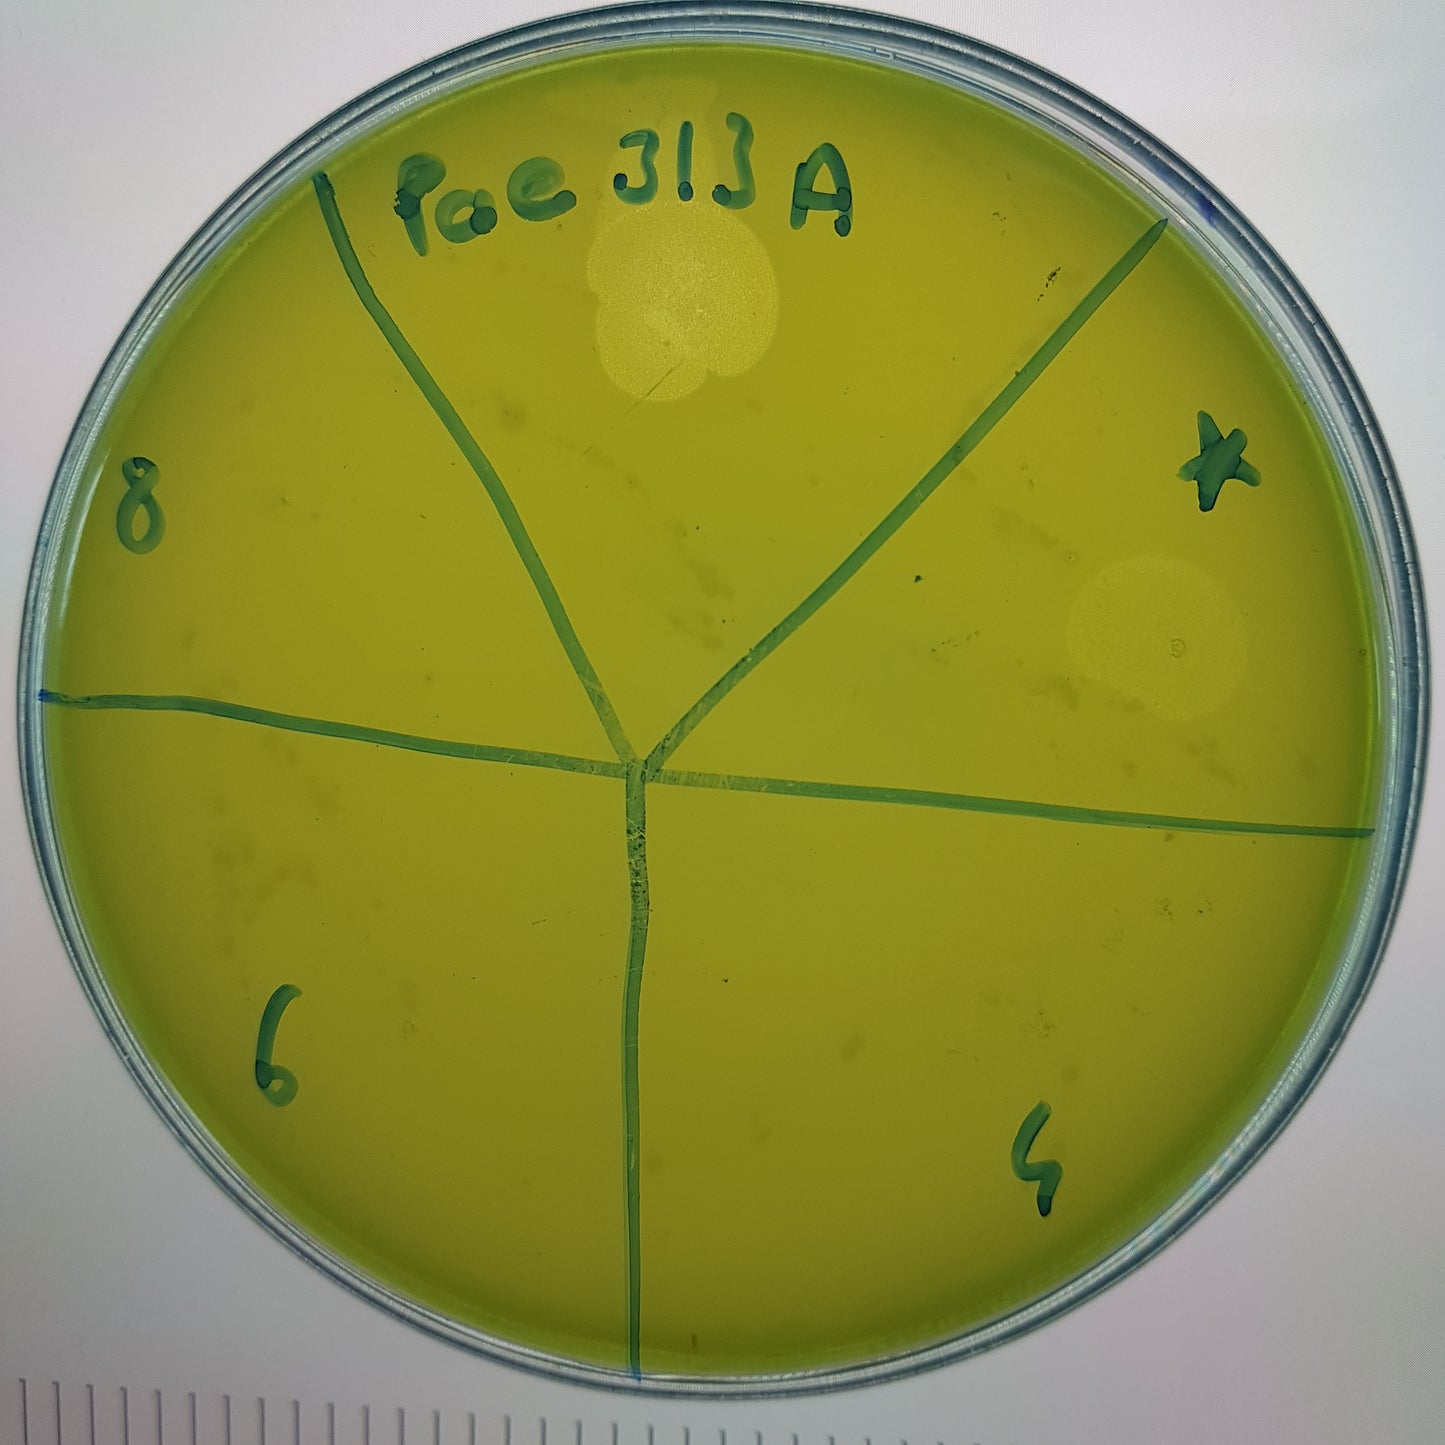 Pseudomonas aeruginosa bacteriophage 130313A